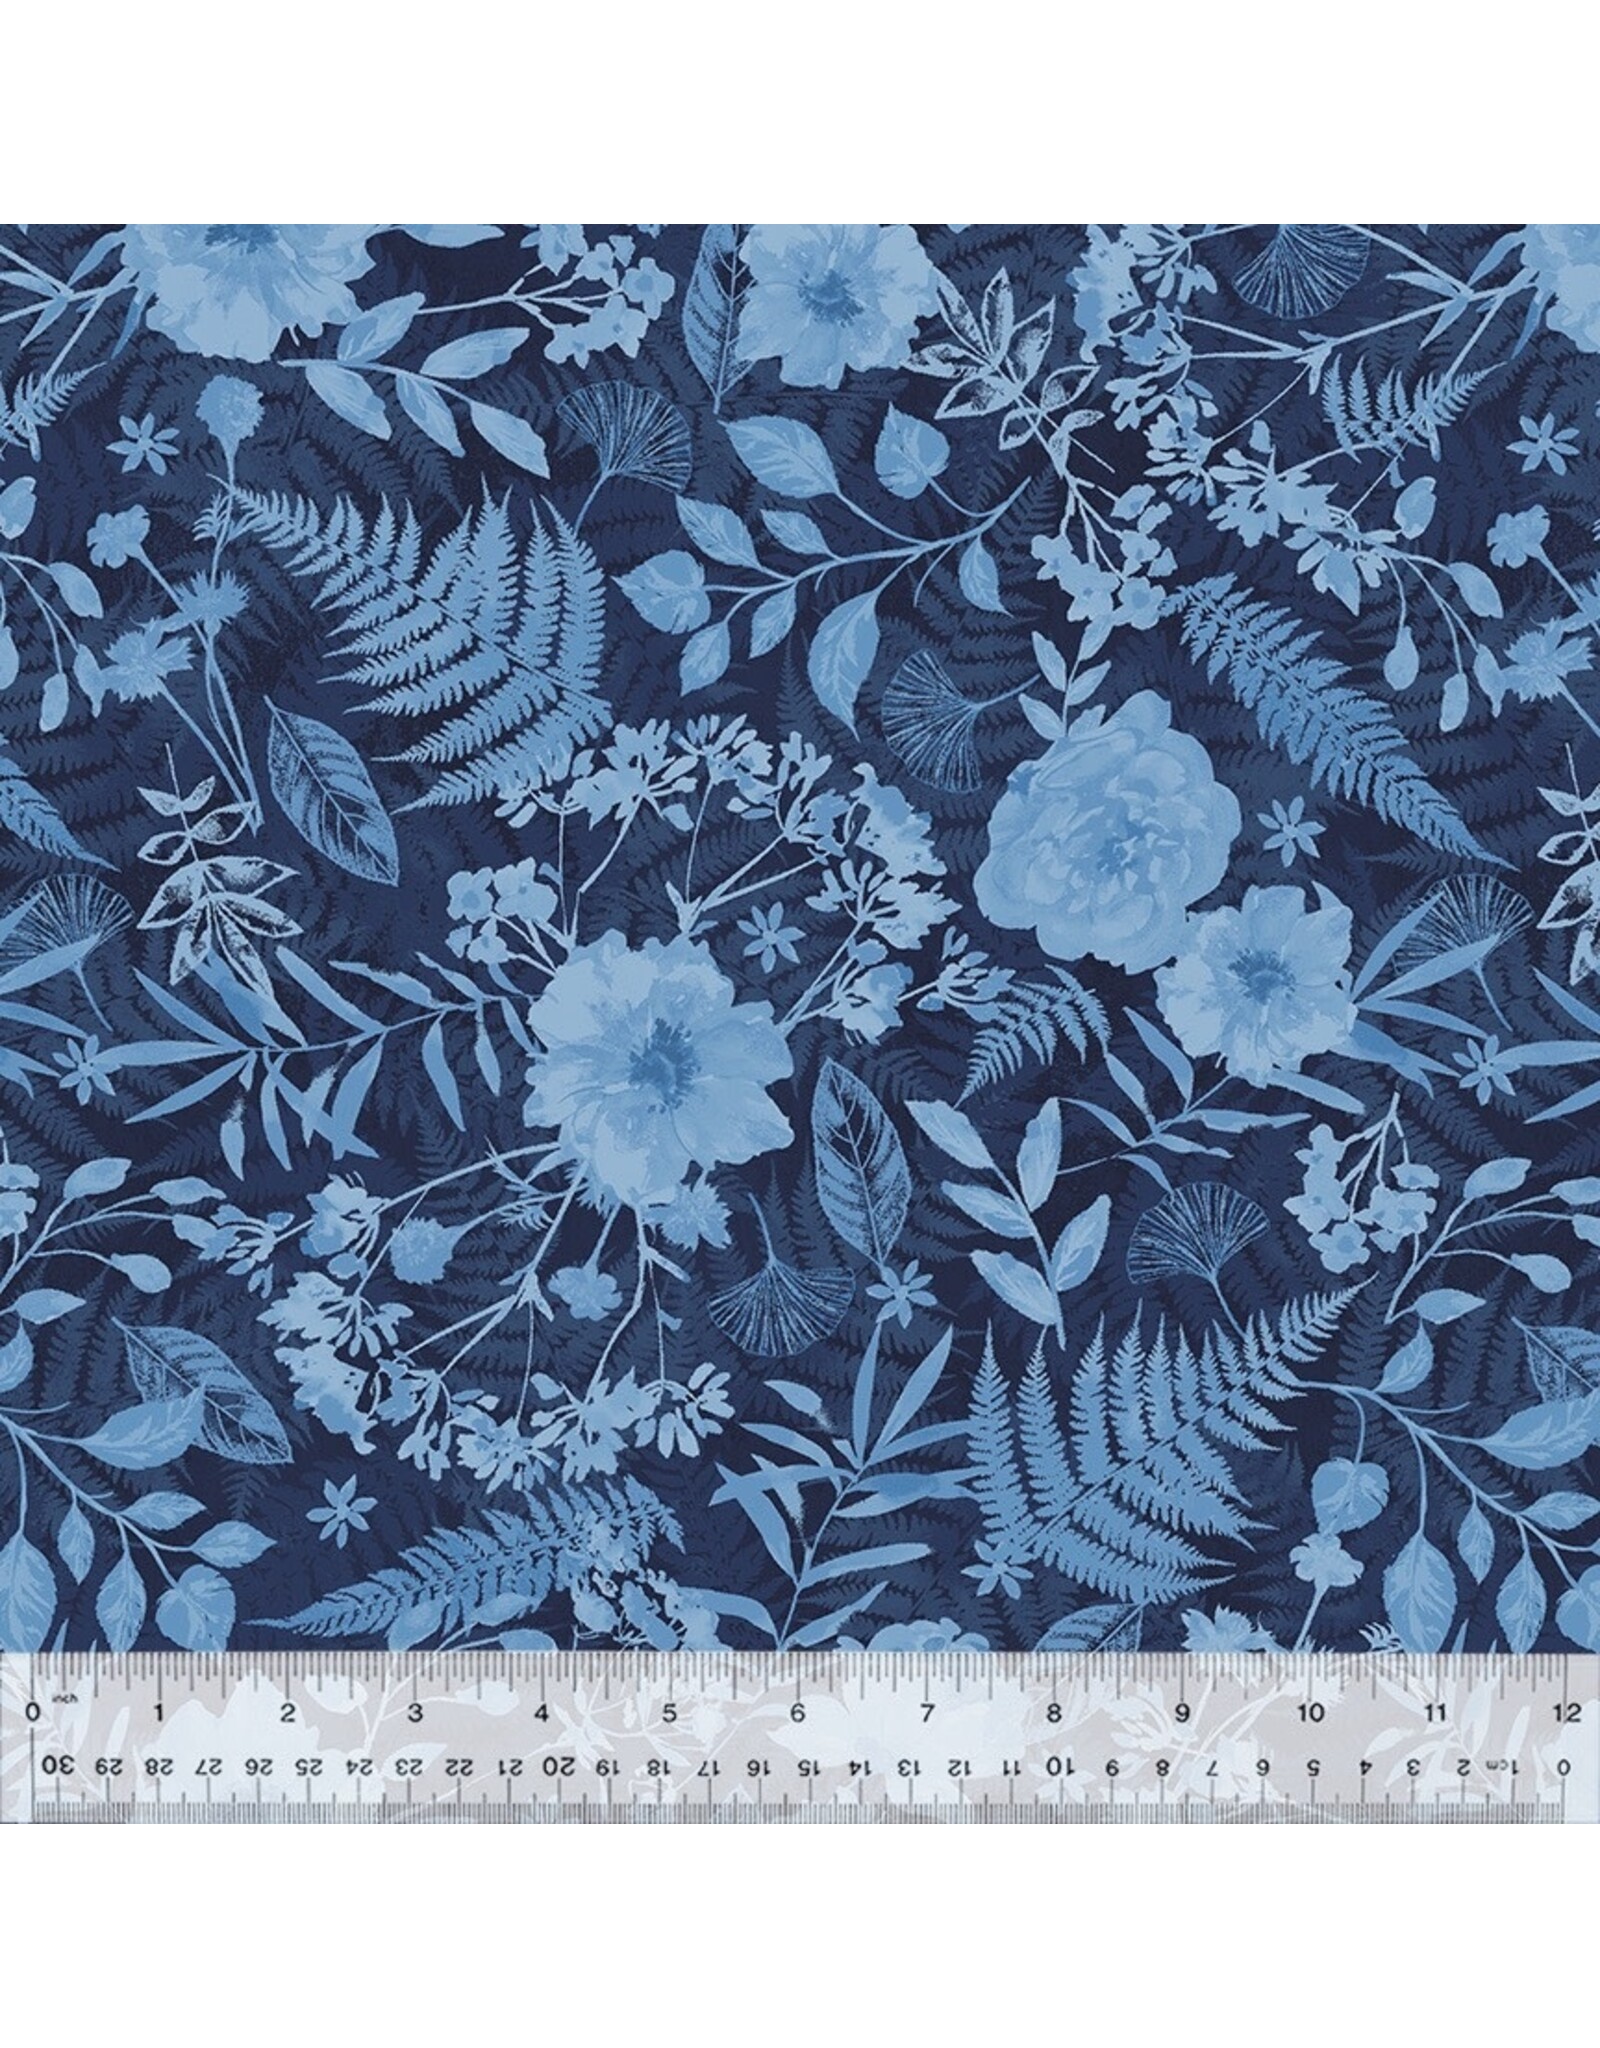 Windham Botanical Blues - Flower Press Navy coupon (± 26 x 110 cm)